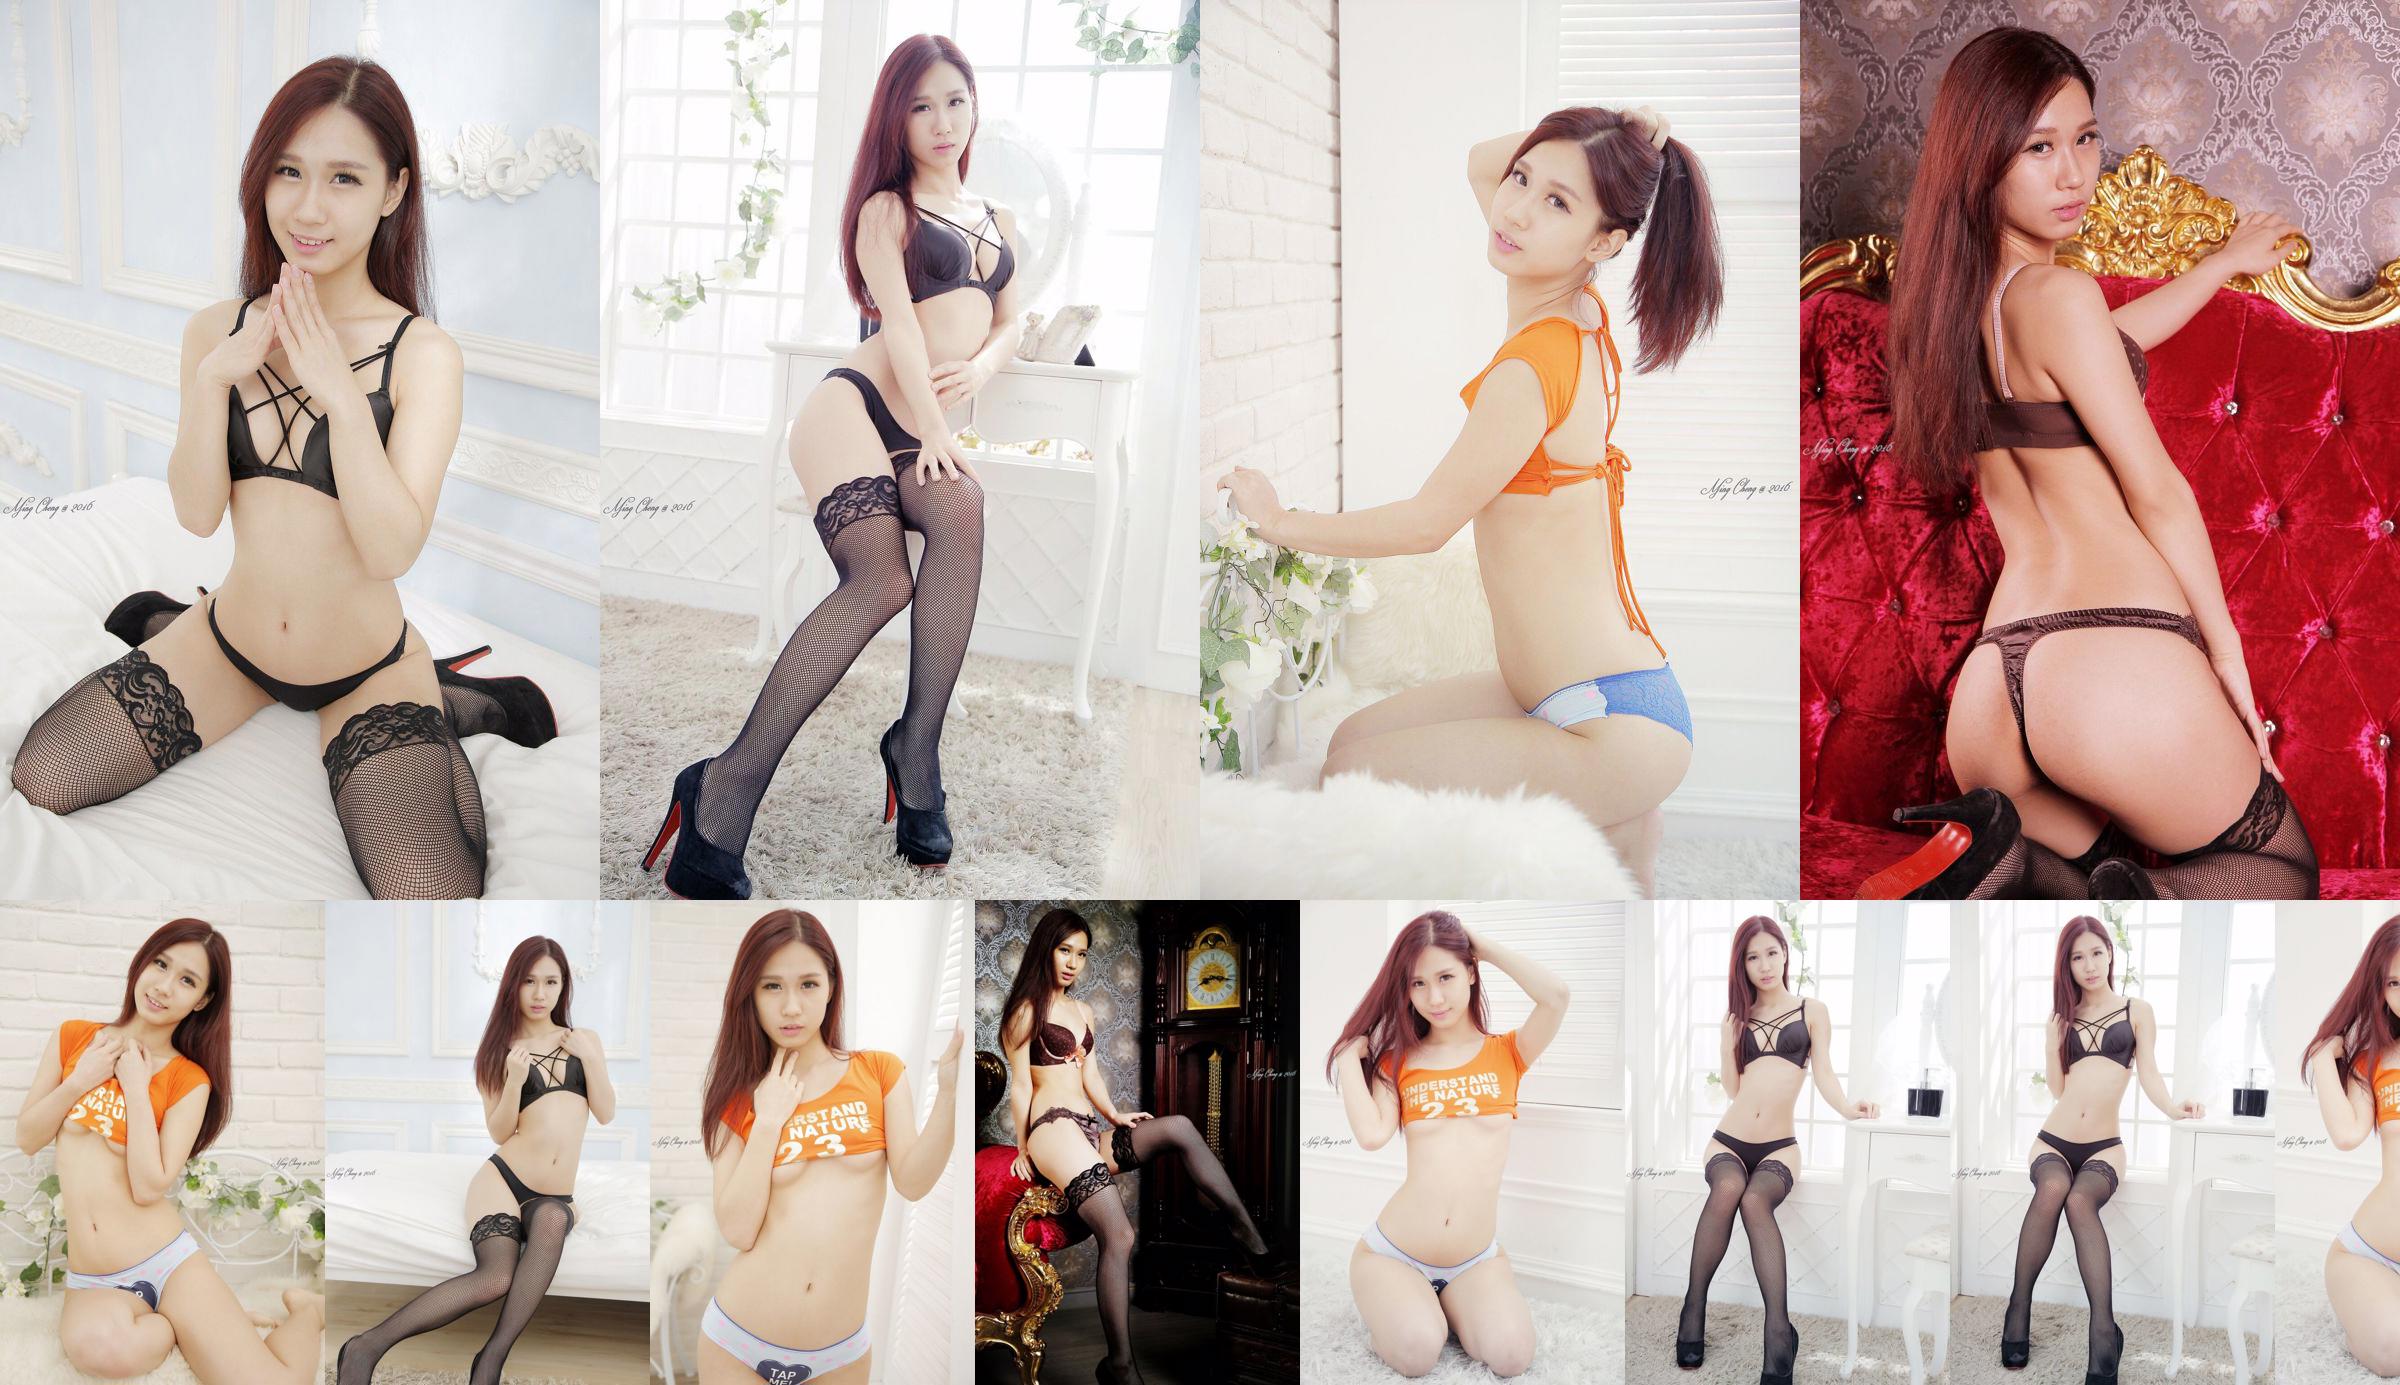 [Taiwan Zhengmei] Belle underwear studio shooting No.d03595 Page 4